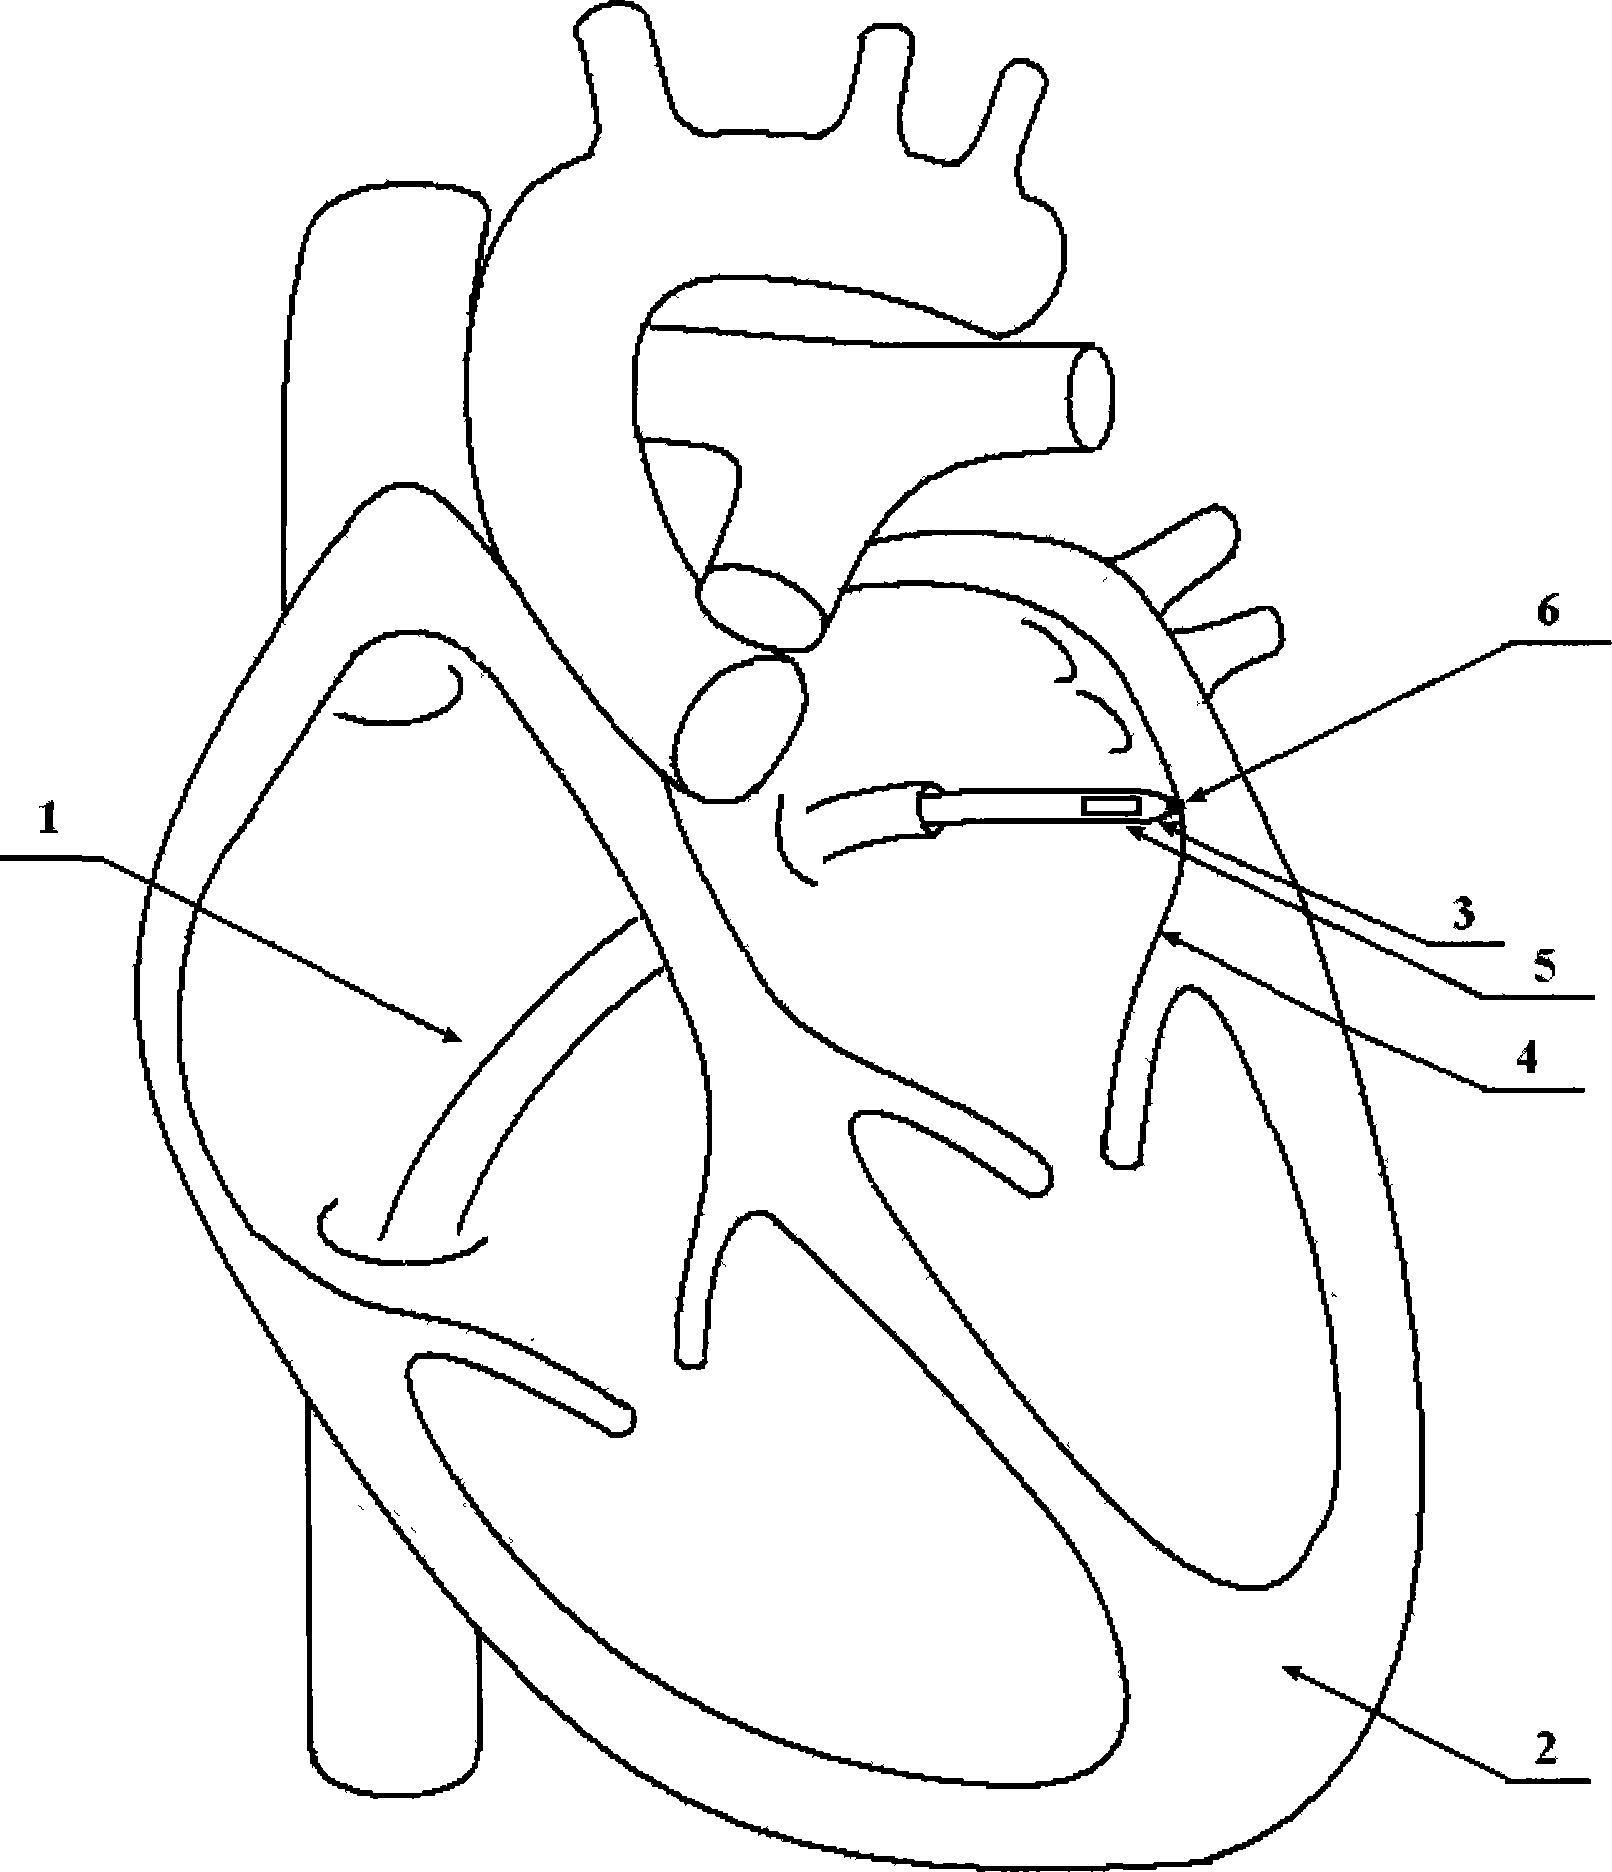 Human body organ three-dimensional surface rebuilding method and system